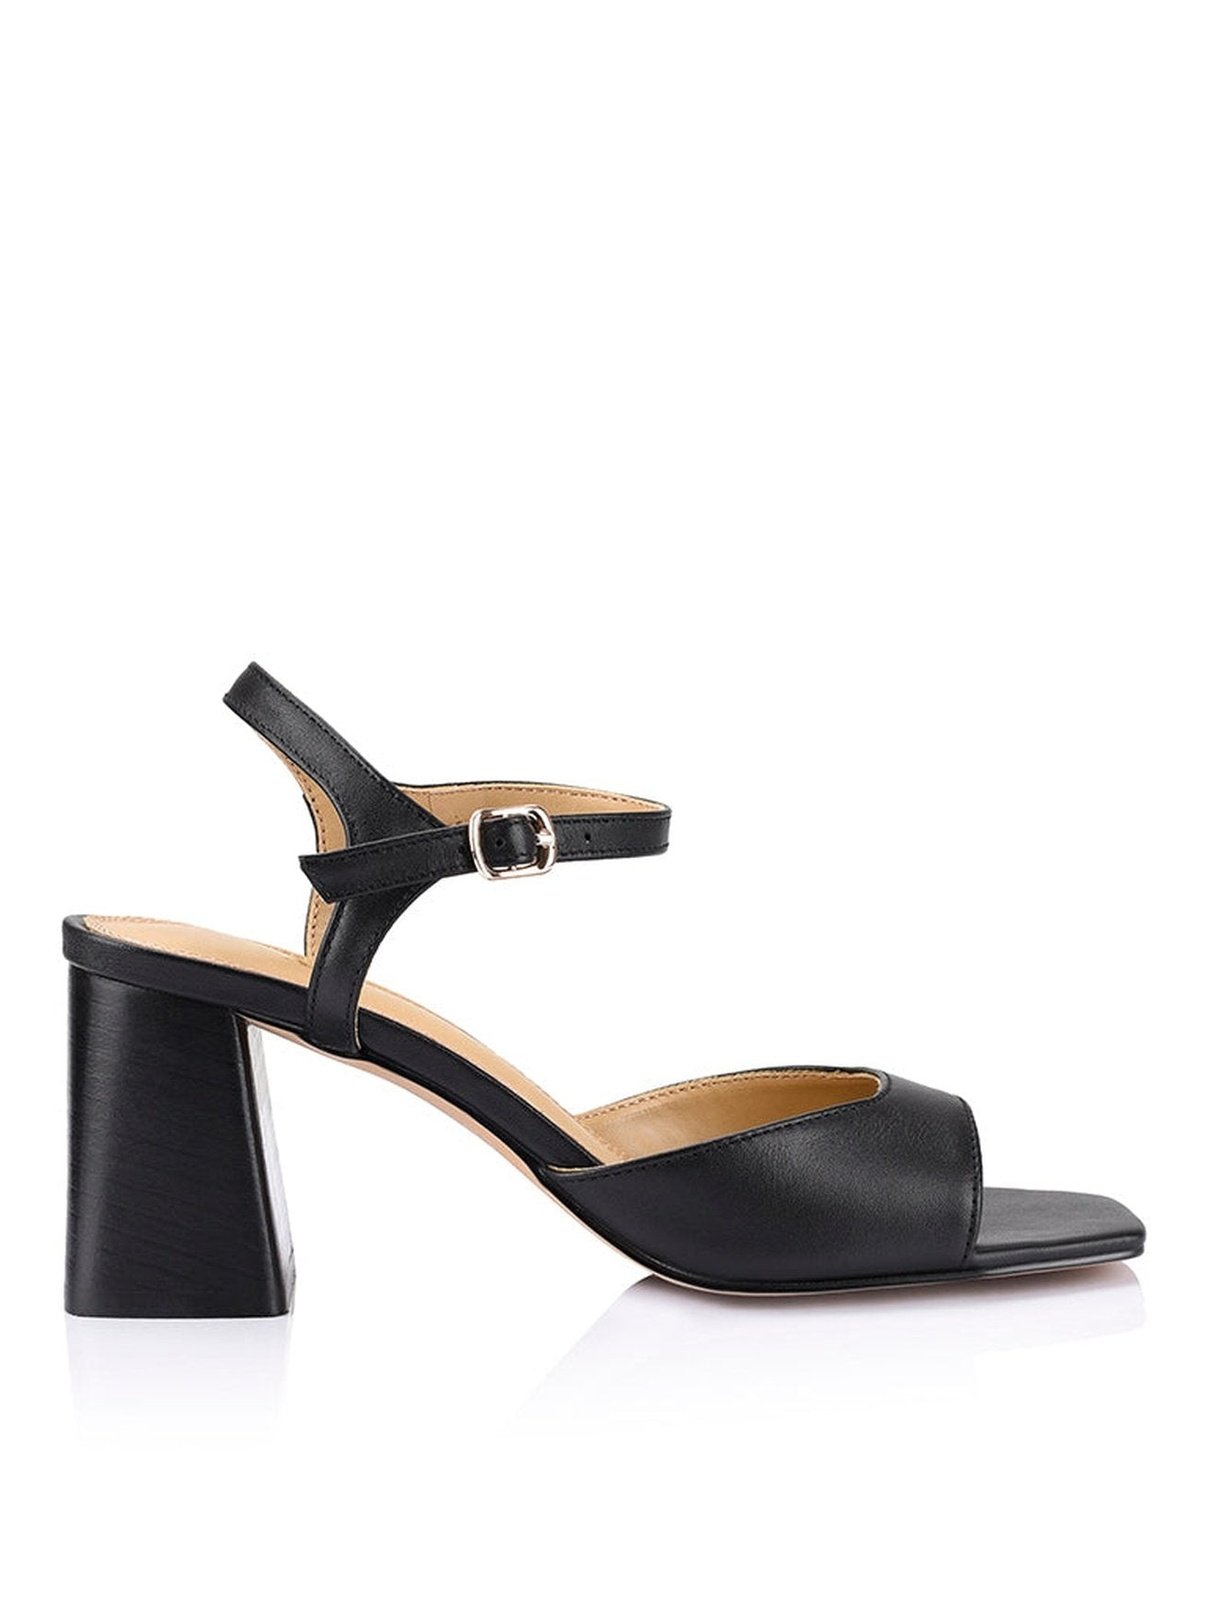 Stomp Heeled Sandals - Black Leather